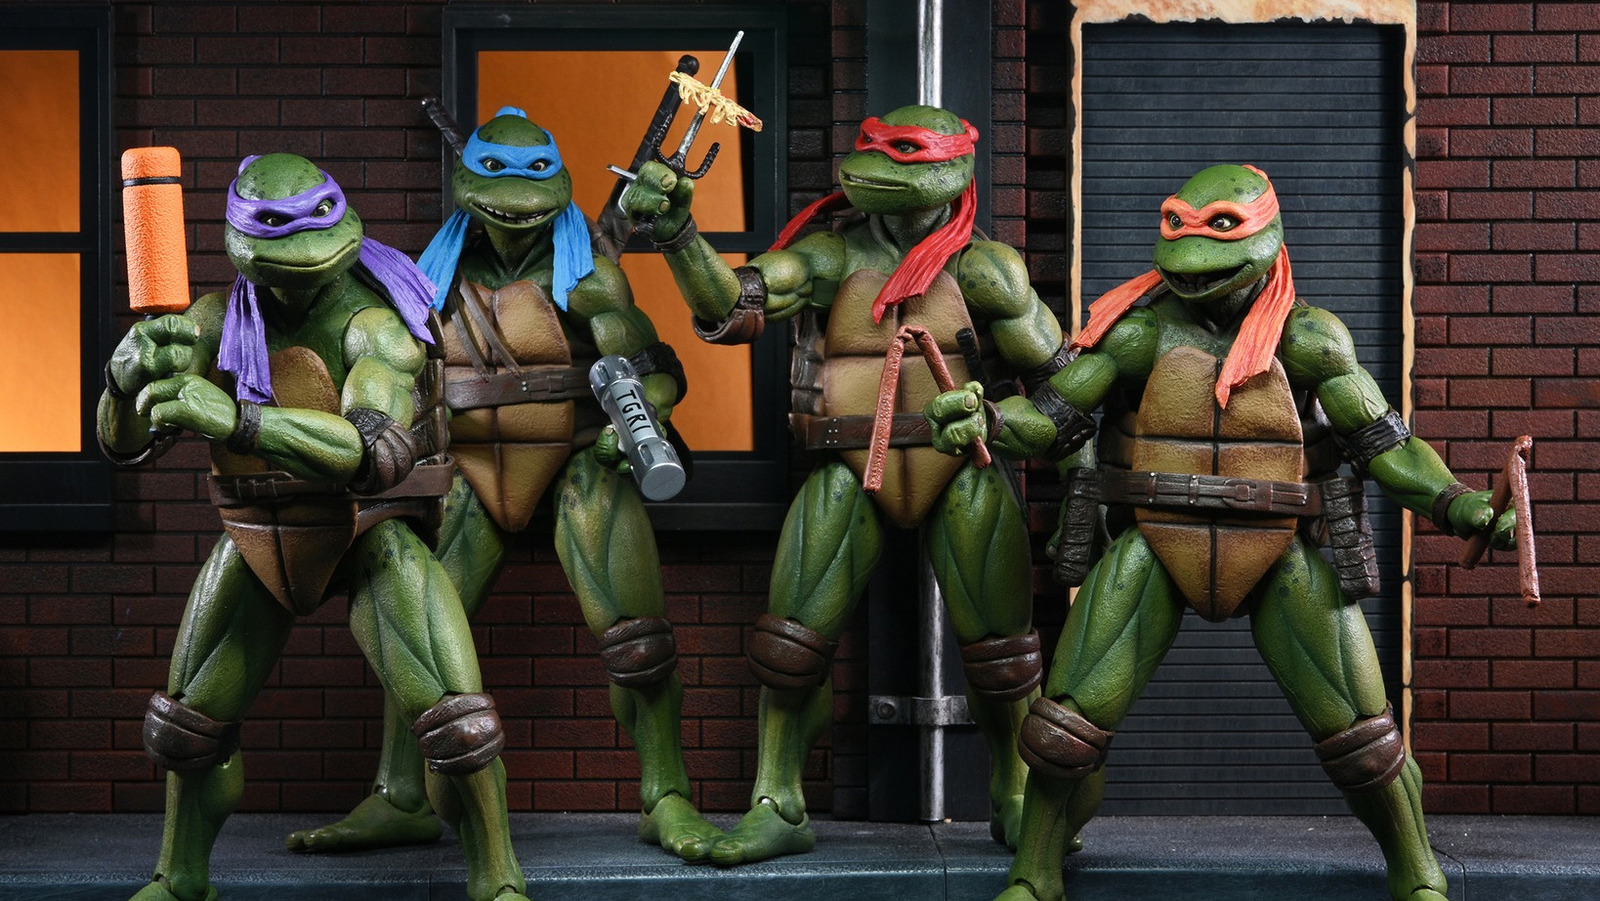 https://www.slashfilm.com/img/gallery/necas-teenage-mutant-ninja-turtles-ii-action-figures-and-accessories-are-totally-bodacious/l-intro-1647894846.jpg